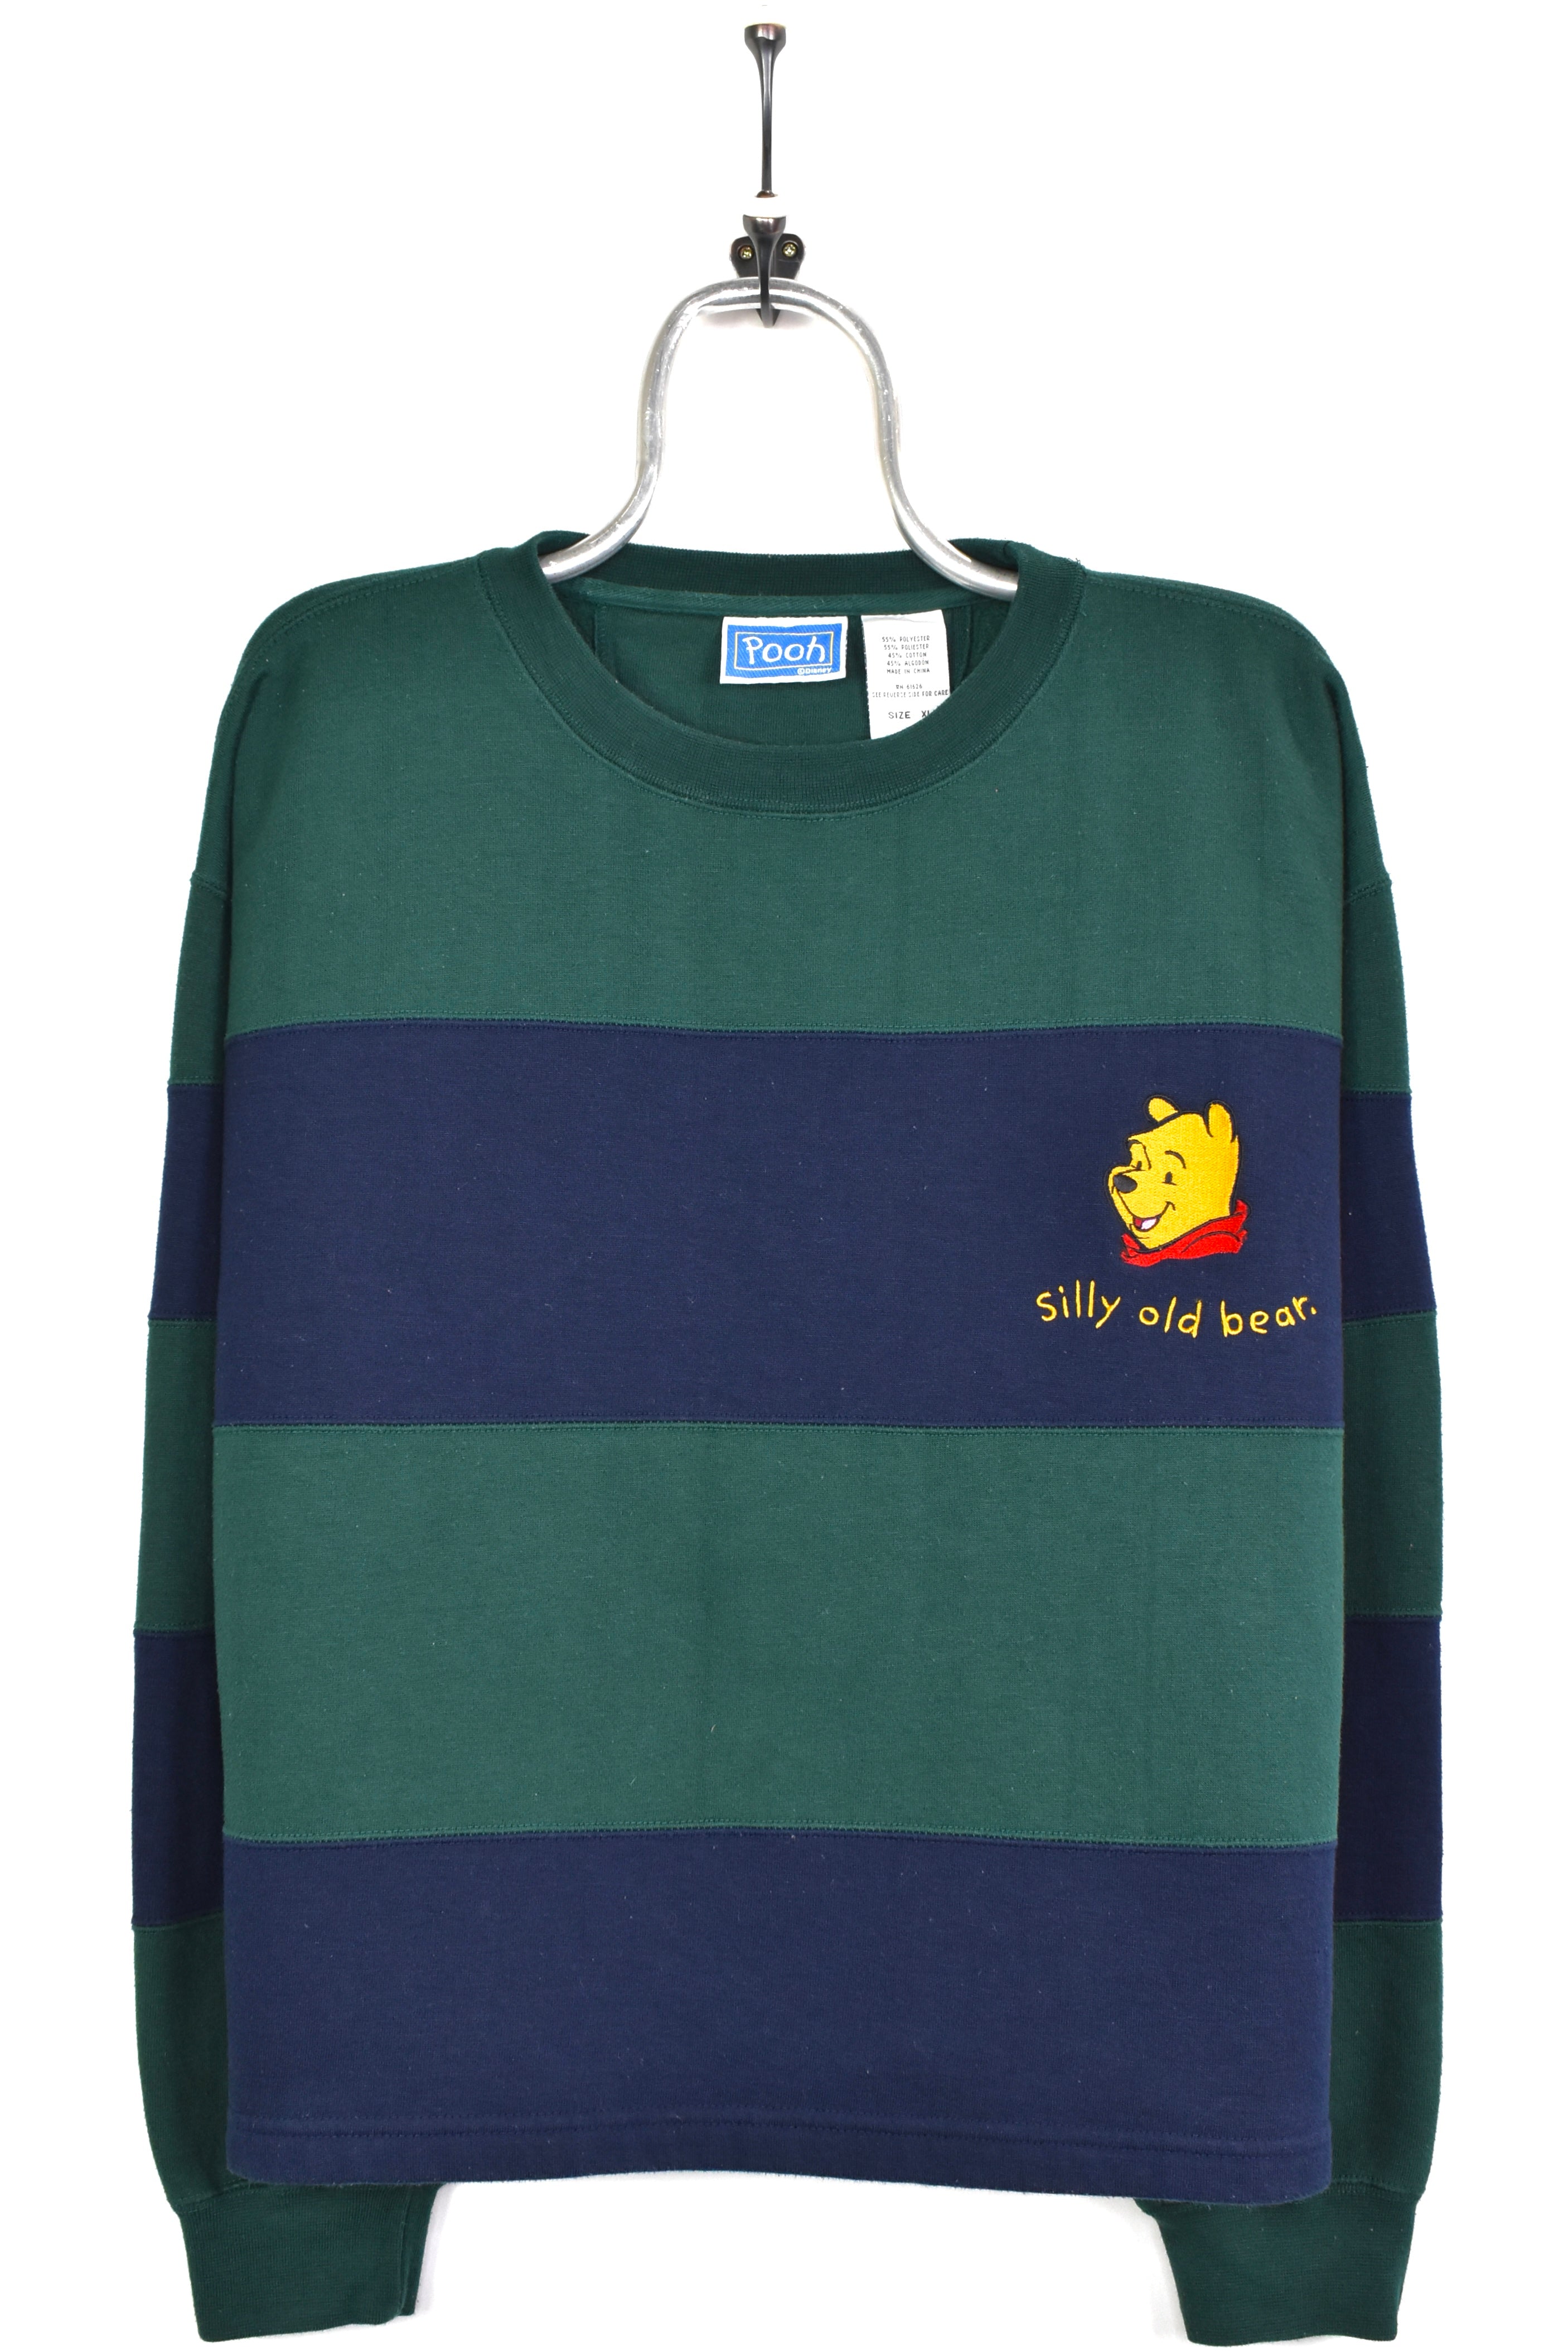 Vintage Women's Disney sweatshirt, Winnie the Pooh embroidered crewneck - XL, striped DISNEY / CARTOON